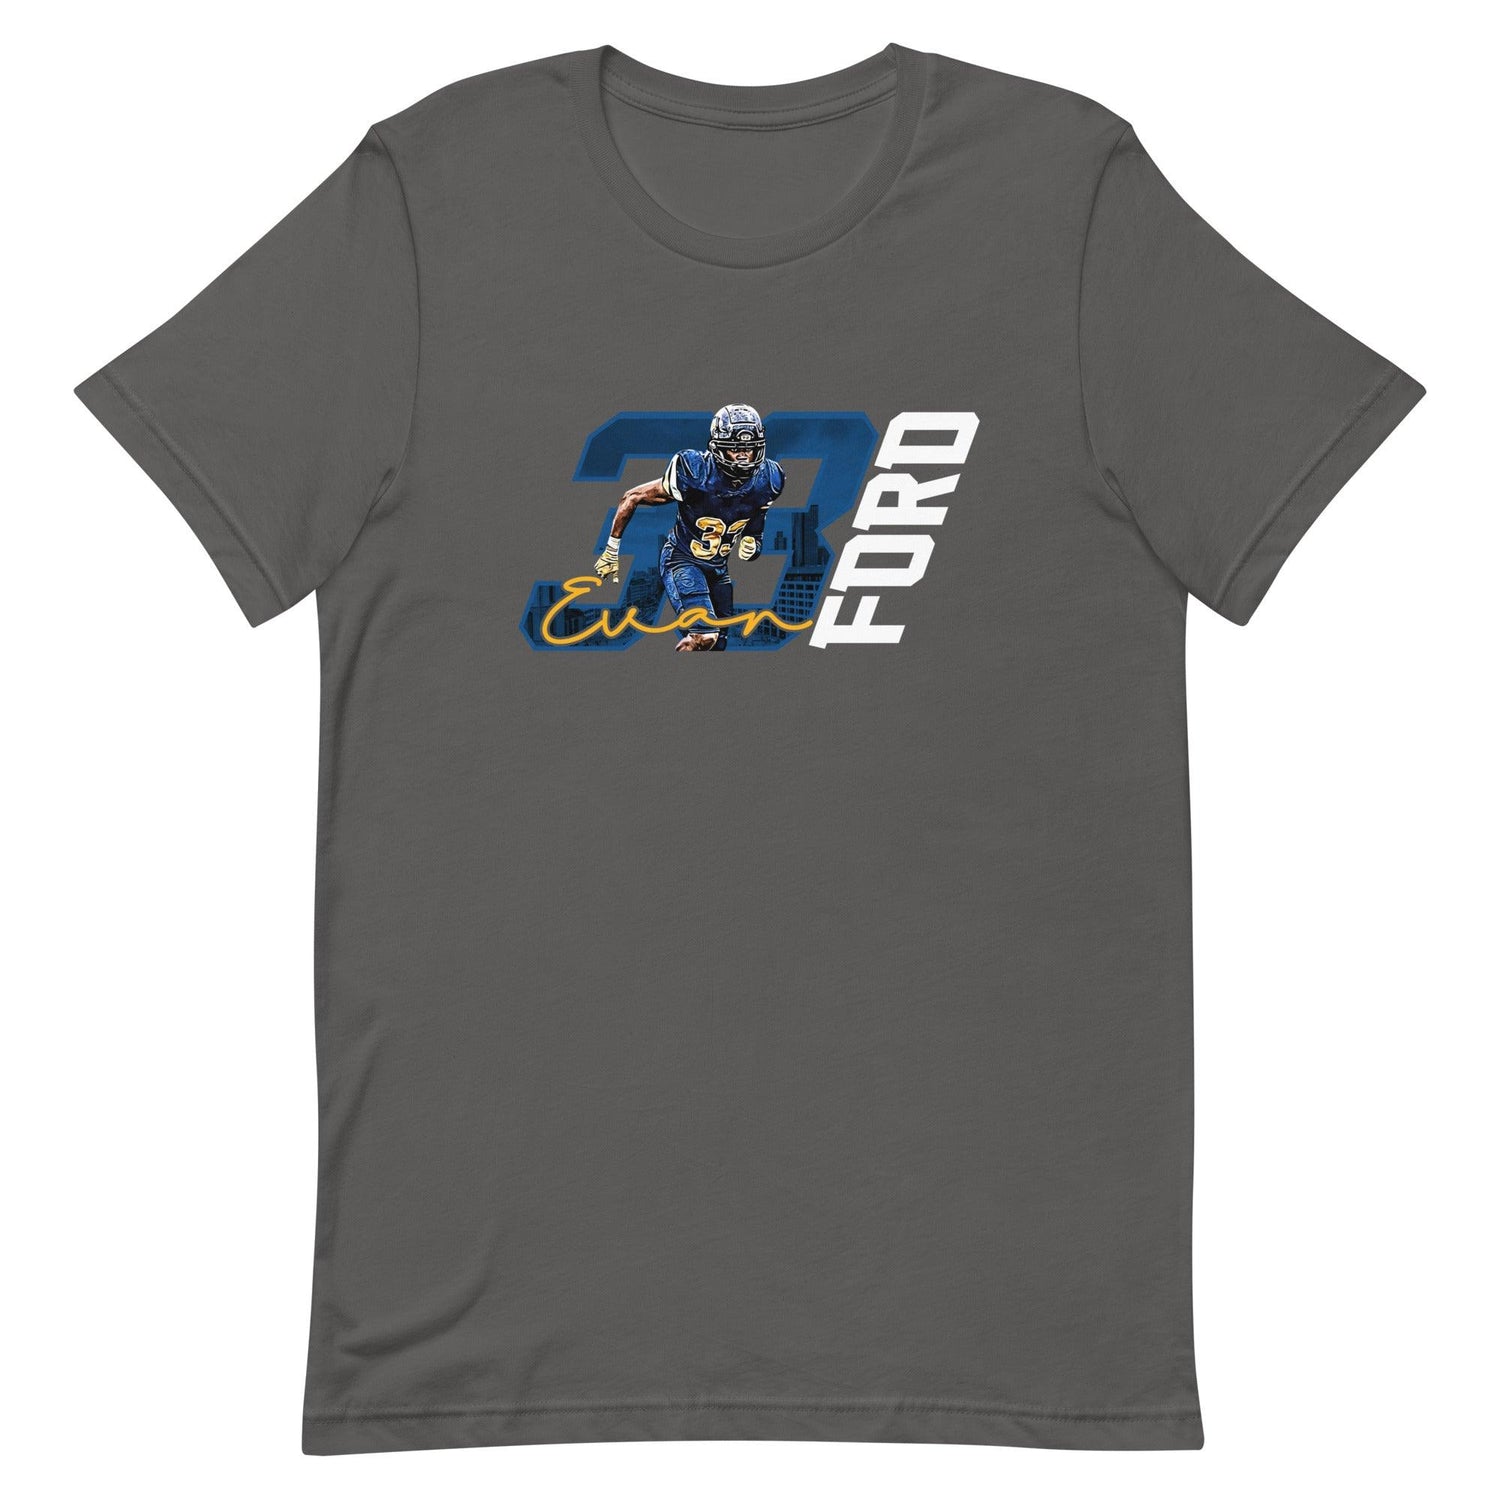 Evan Ford "Jersey" t-shirt - Fan Arch